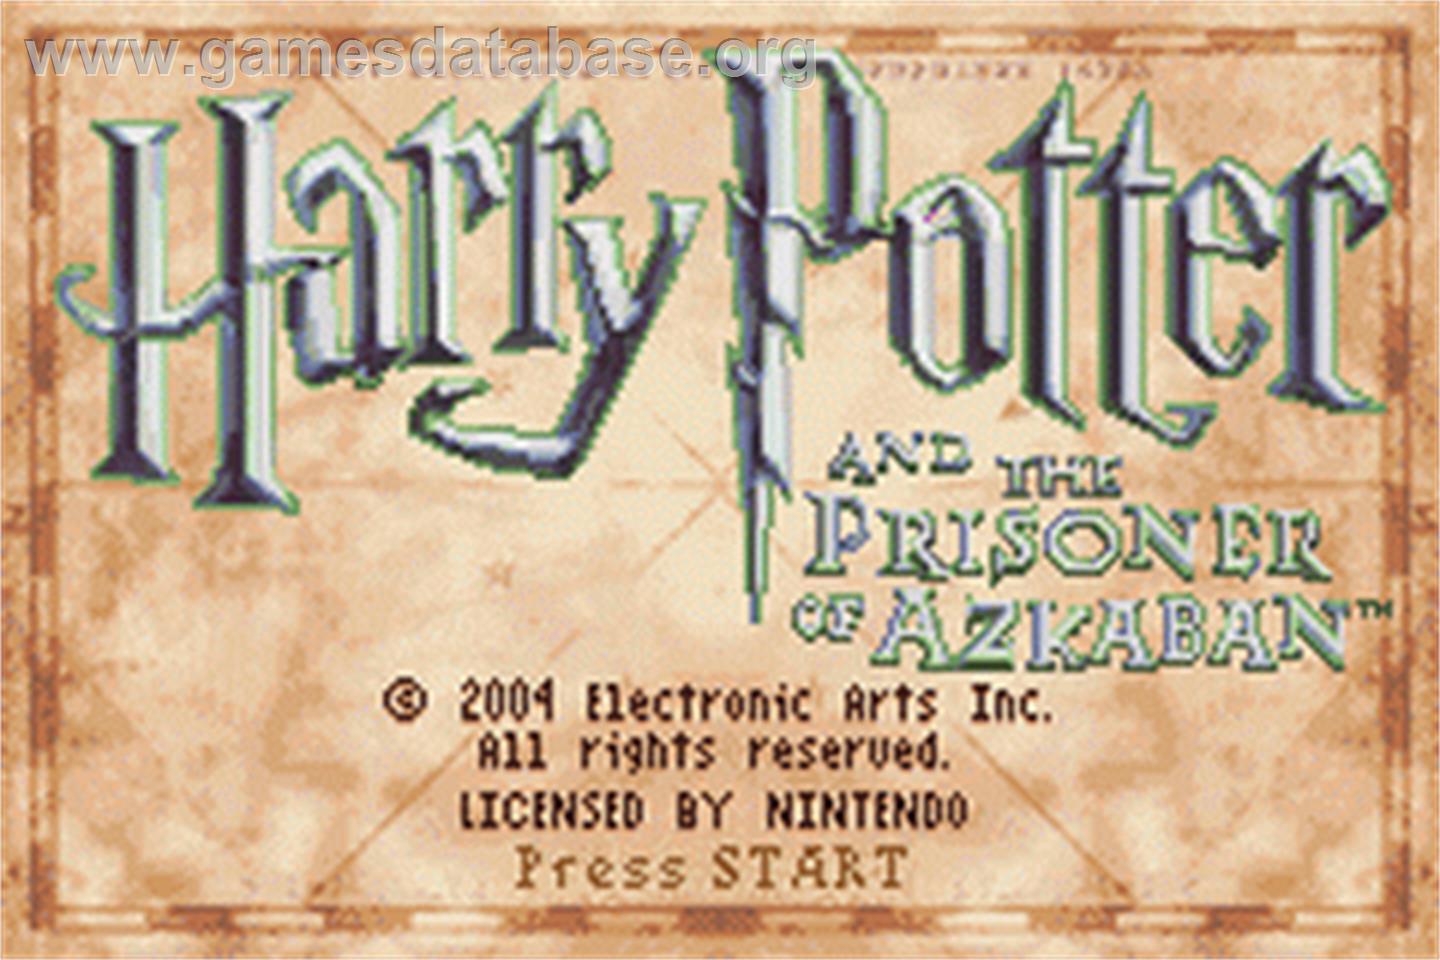 Harry Potter and the Prisoner of Azkaban - Nintendo Game Boy Advance - Artwork - Title Screen